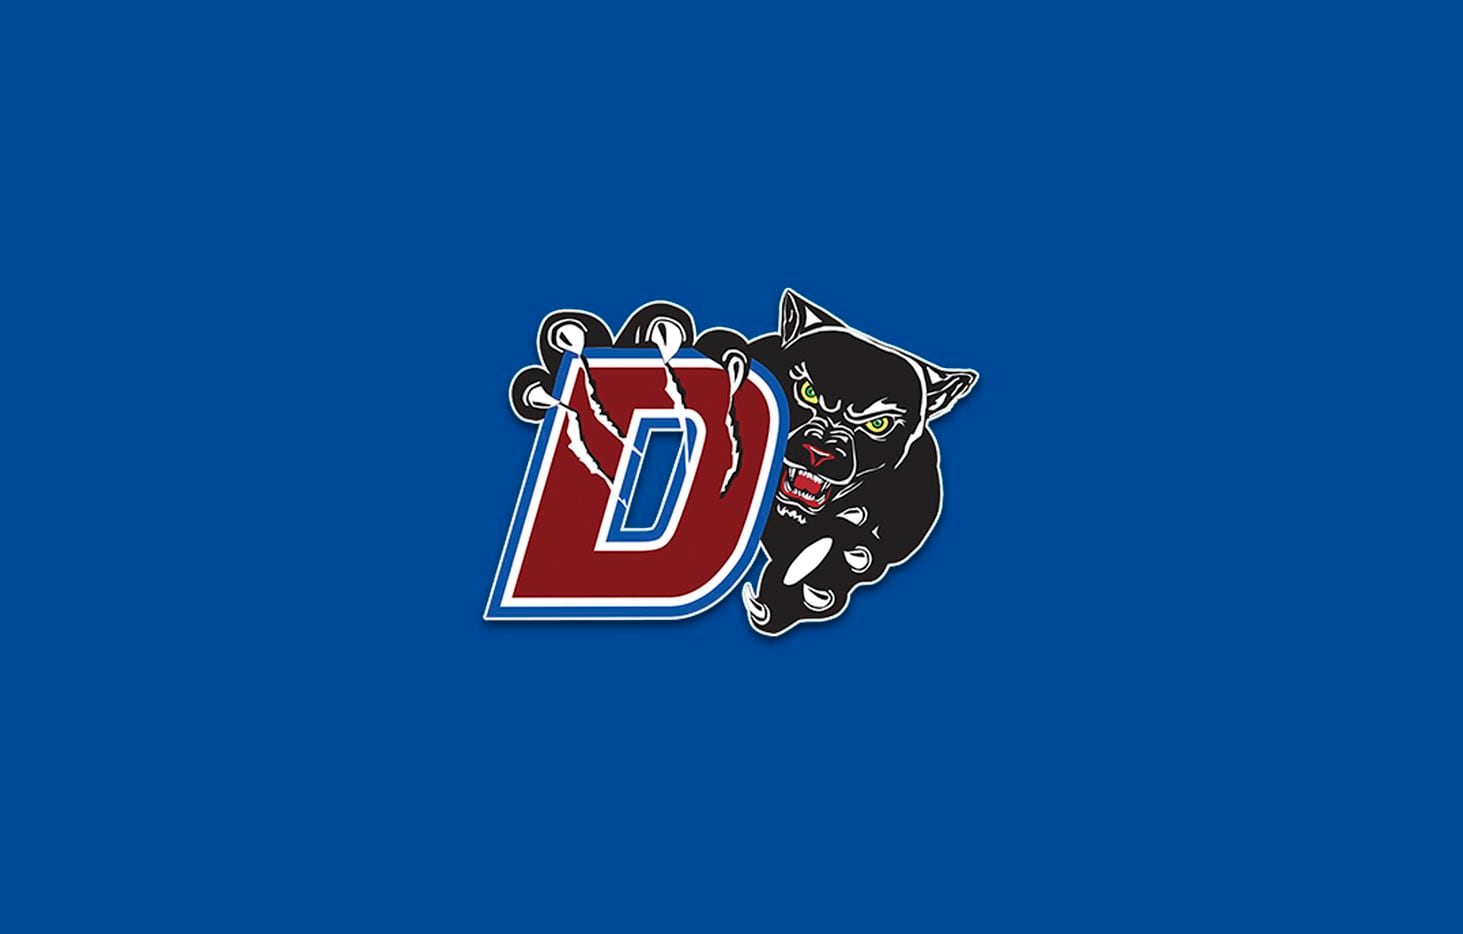 Duncanville logo.